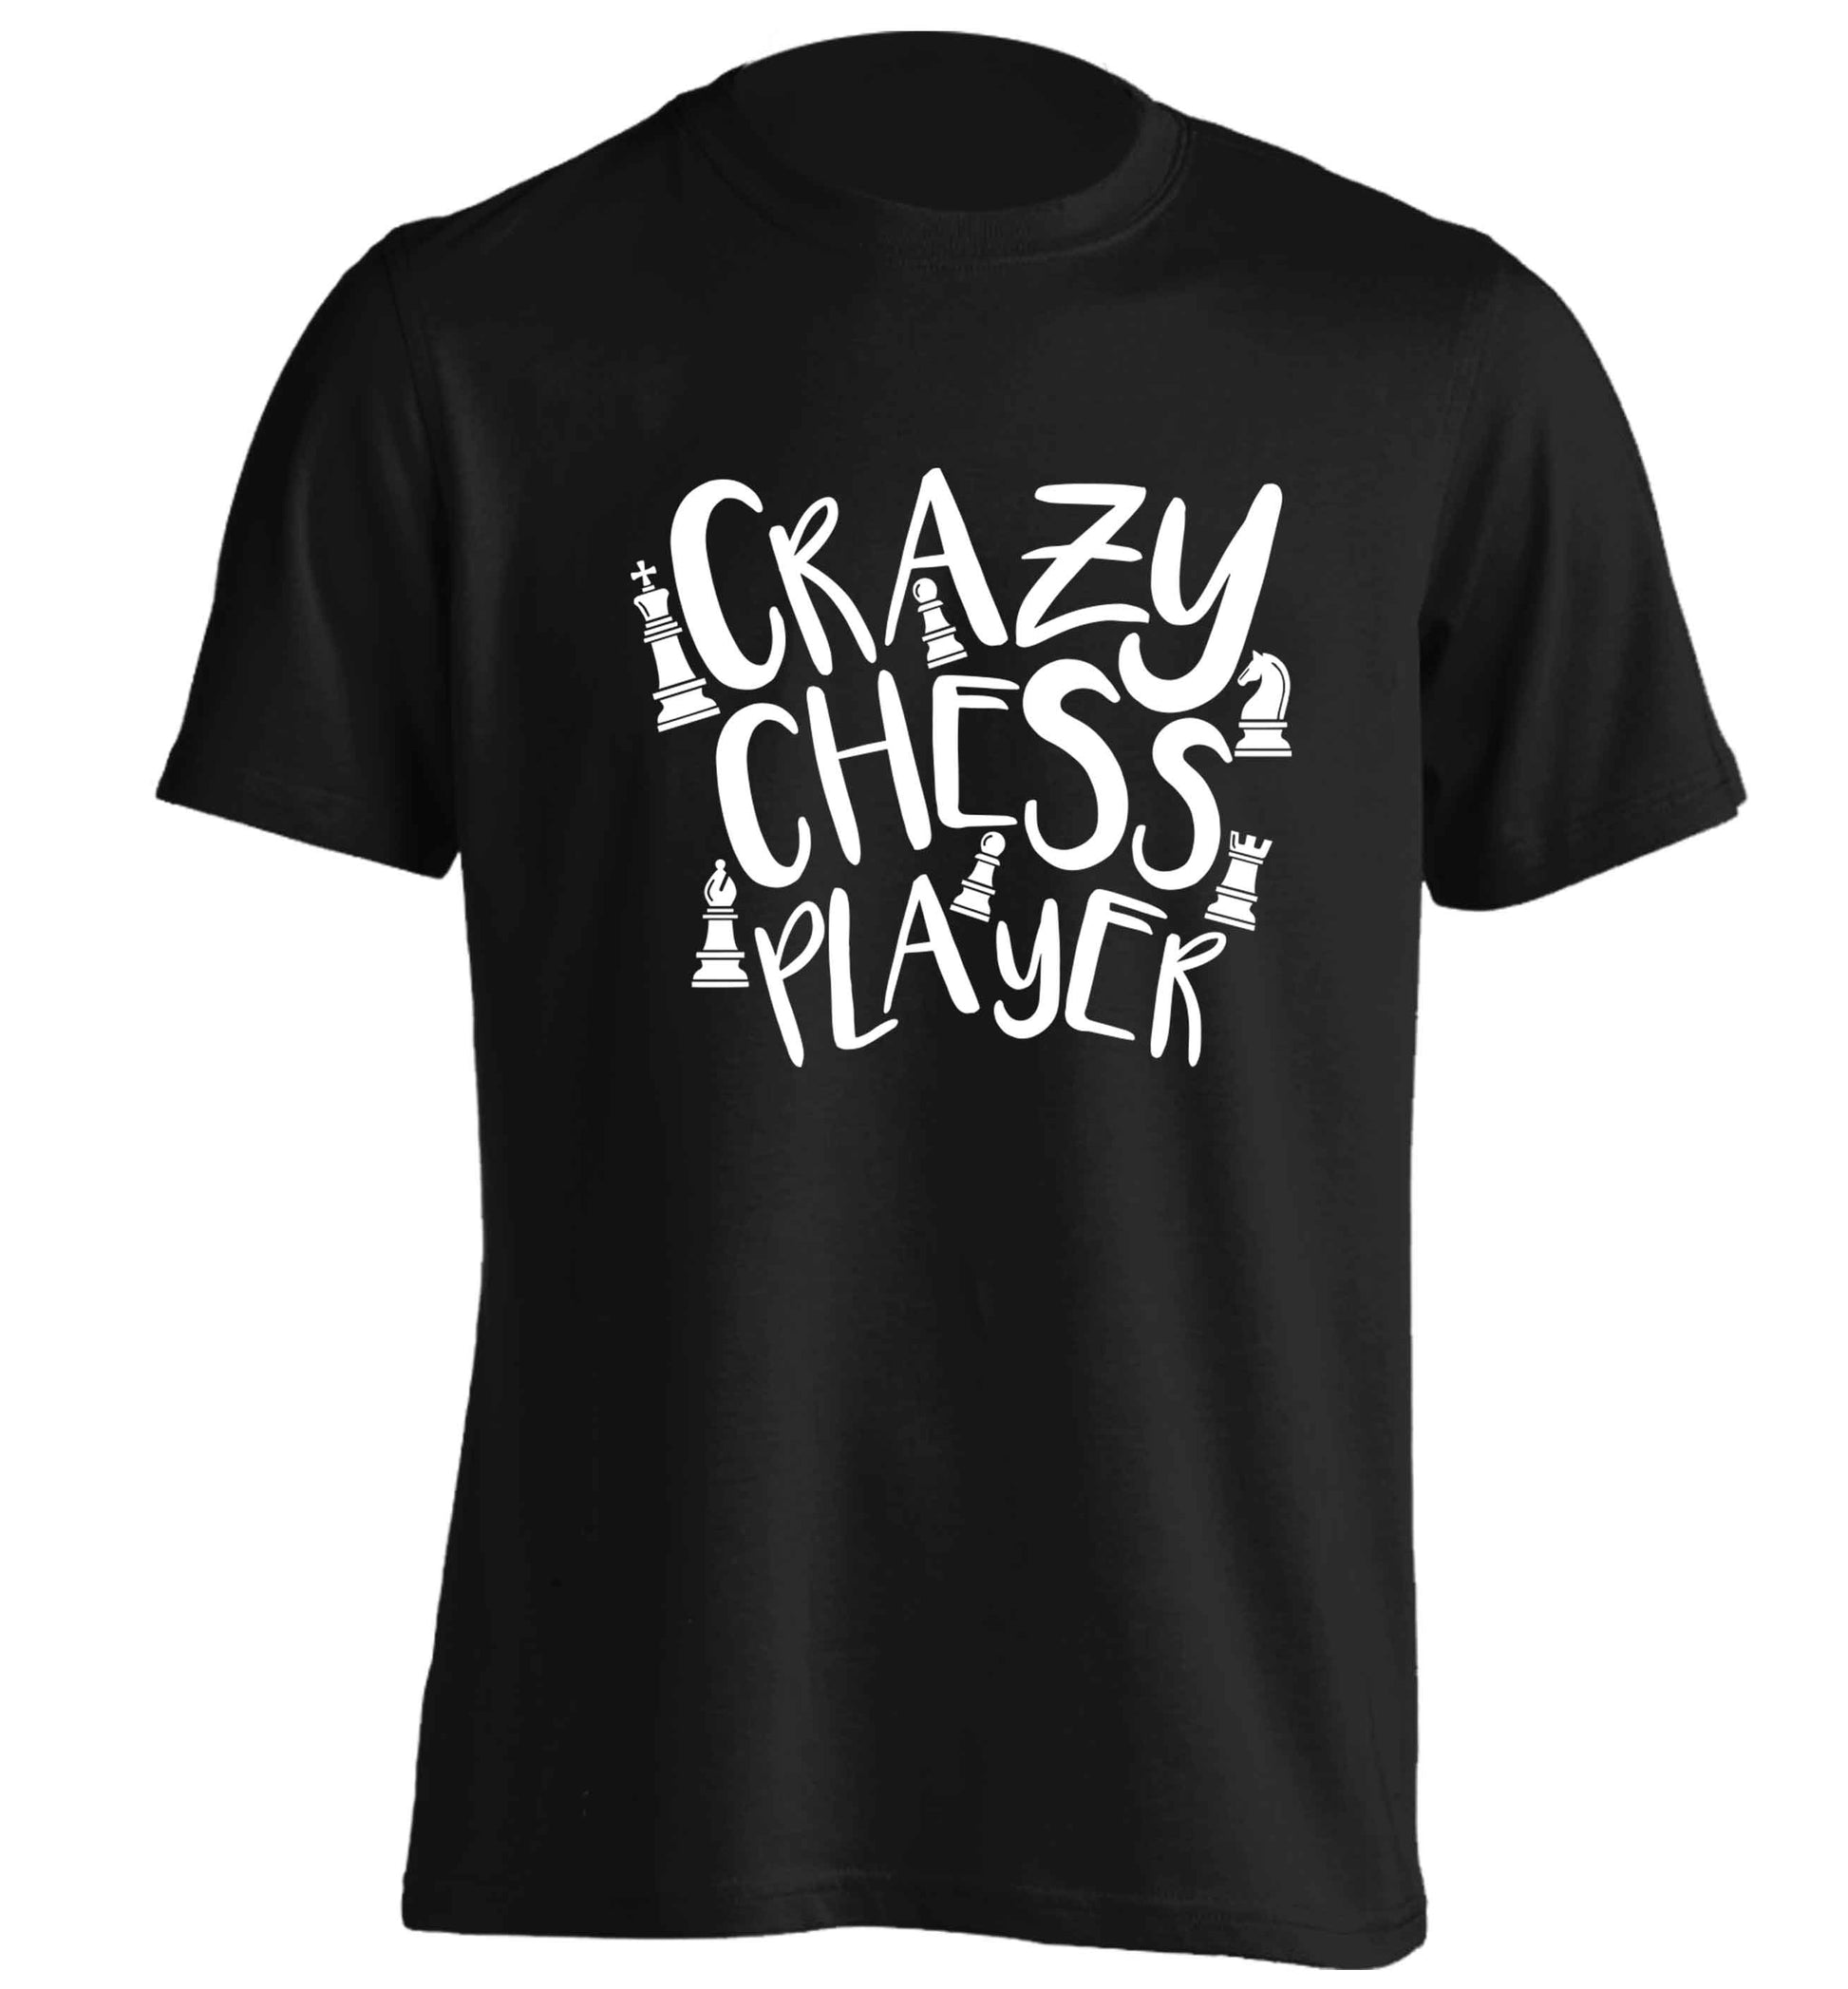 Crazy chess player adults unisex black Tshirt 2XL